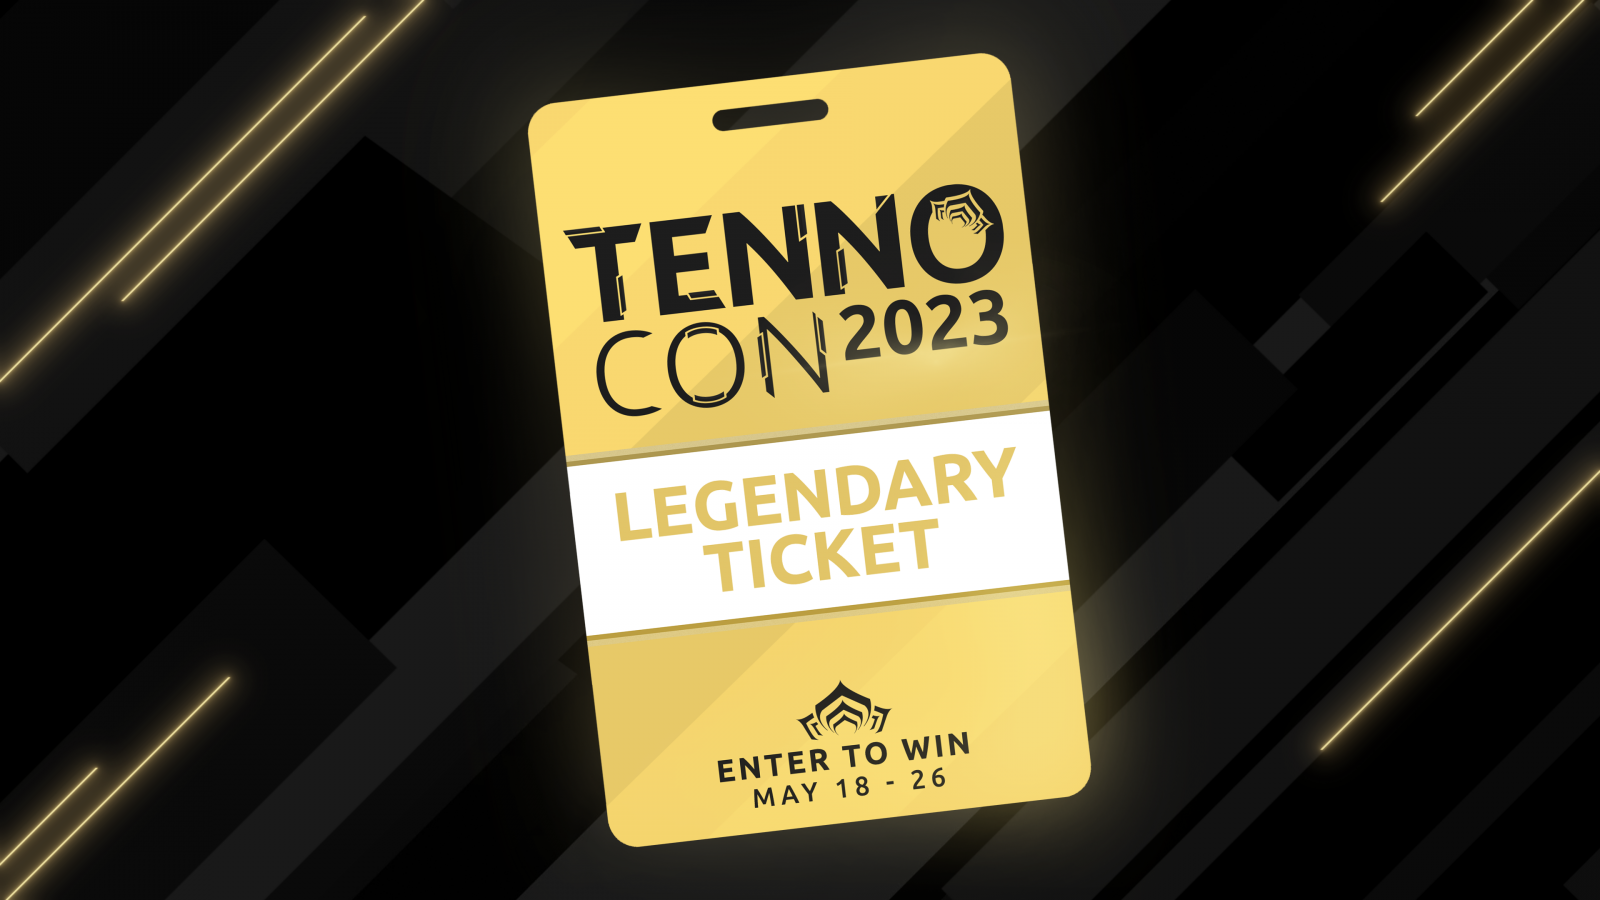 Giveaway Biglietto Leggendario TennoCon 2023